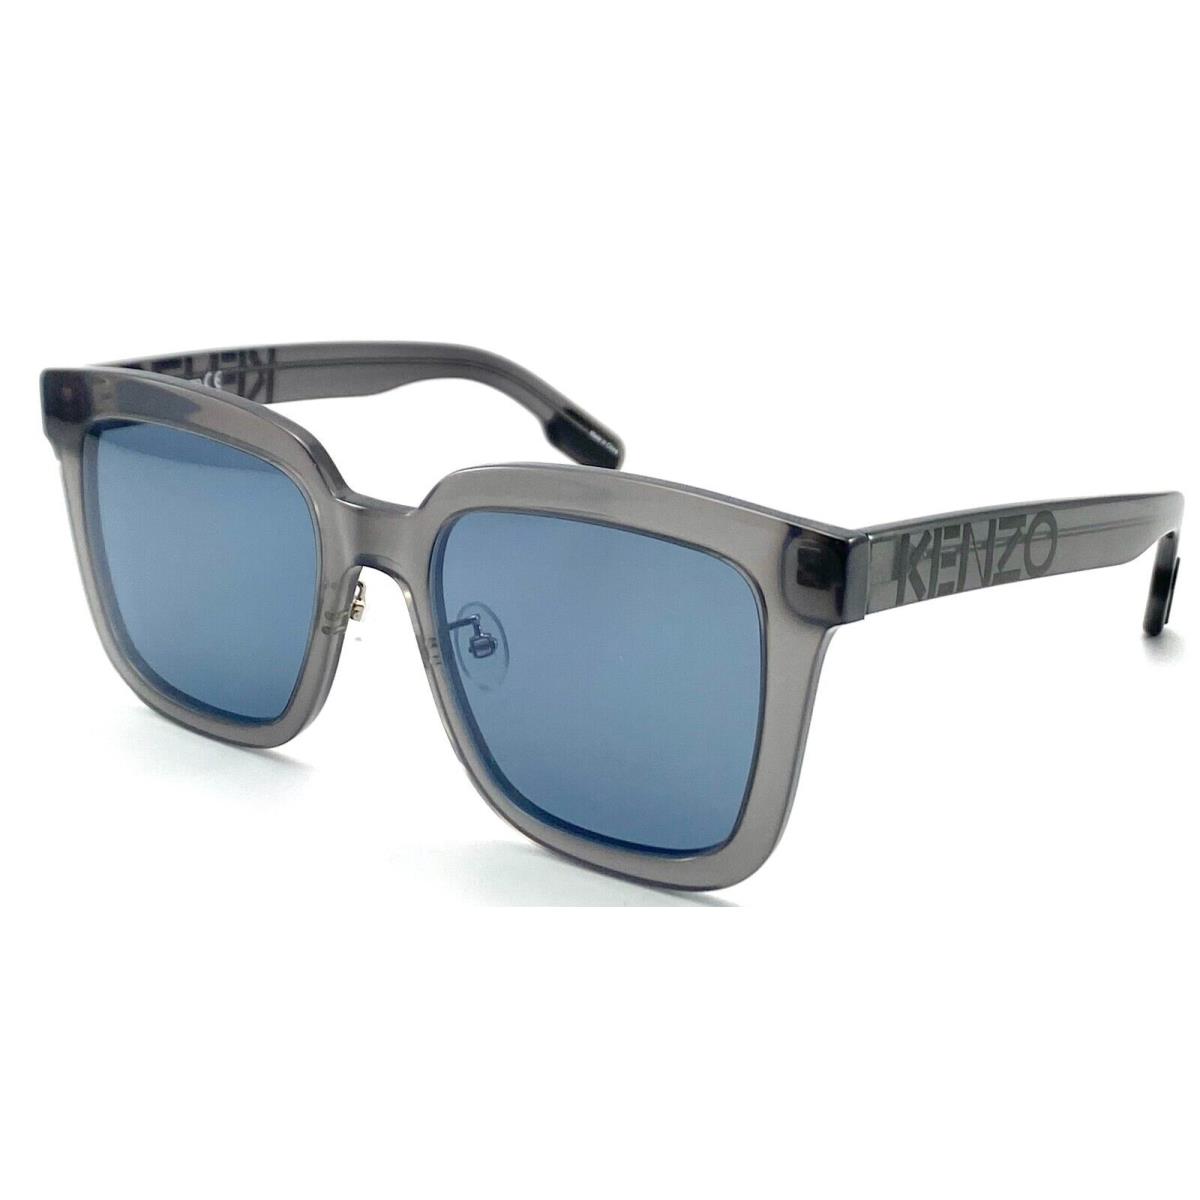 Kenzo Paris KZ40087F 20C Gray Sunglasses 54-20 150 W/case